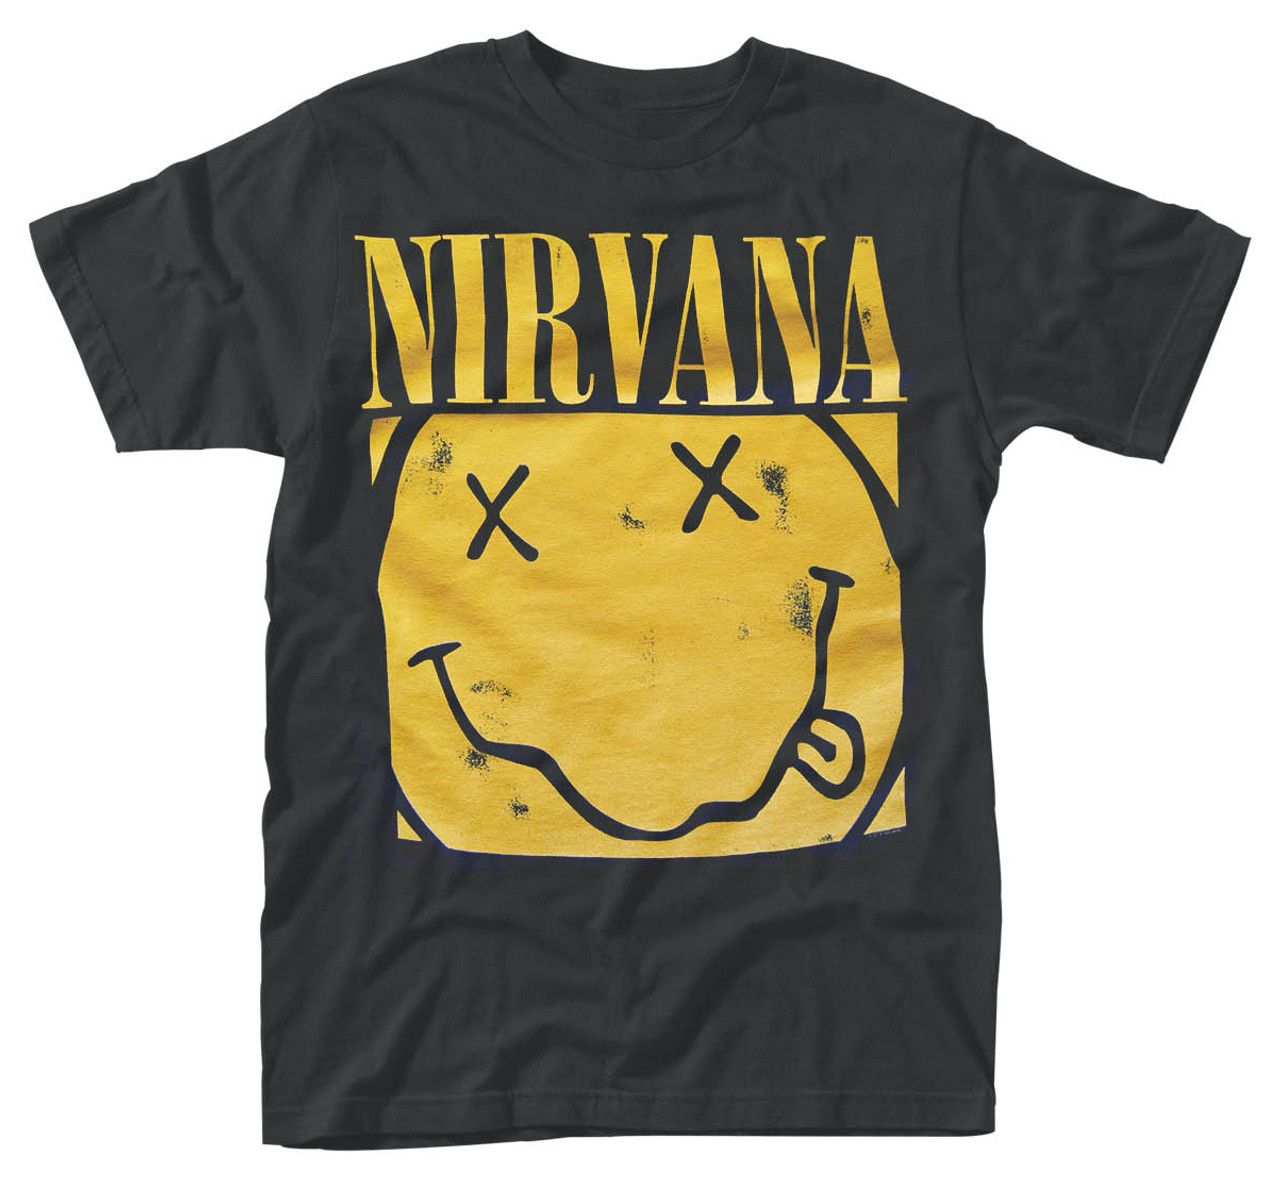 Nirvana Merch футболки. Мерч Нирвана футболка. Нирвана мерч. Nirvana t Shirt 90s. Nirvana t